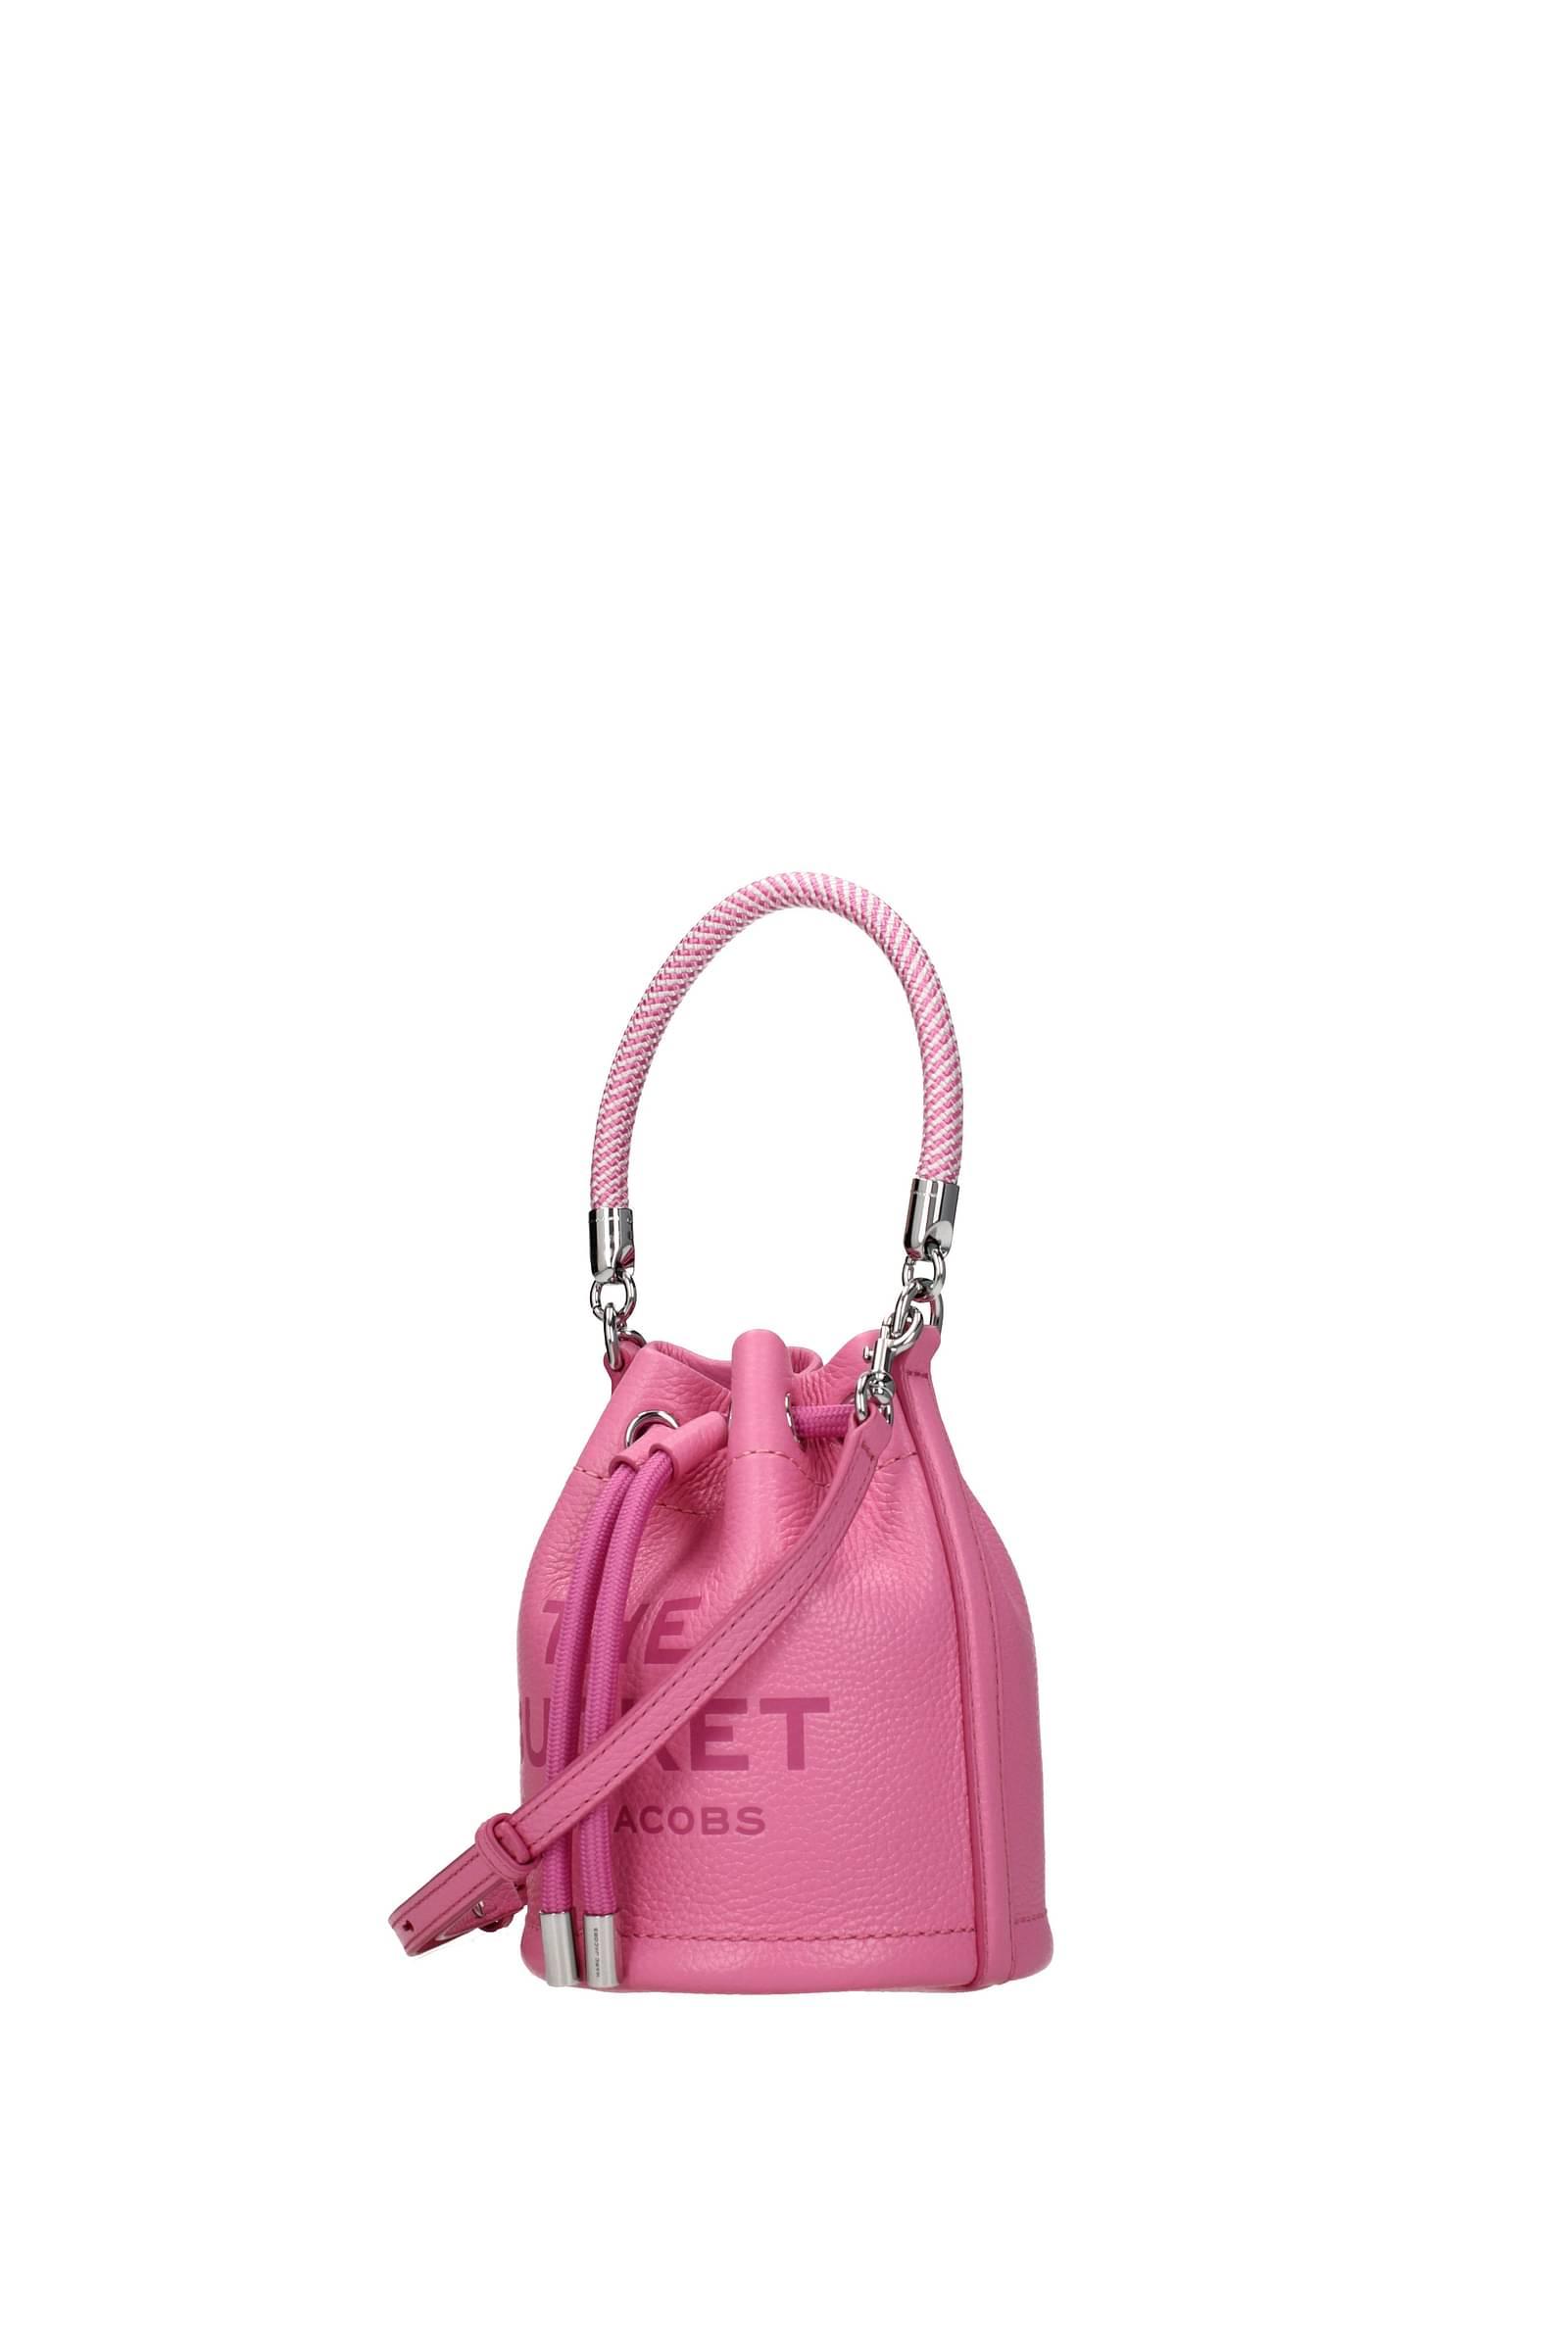 Luxury bag - Neo pink micro city bag